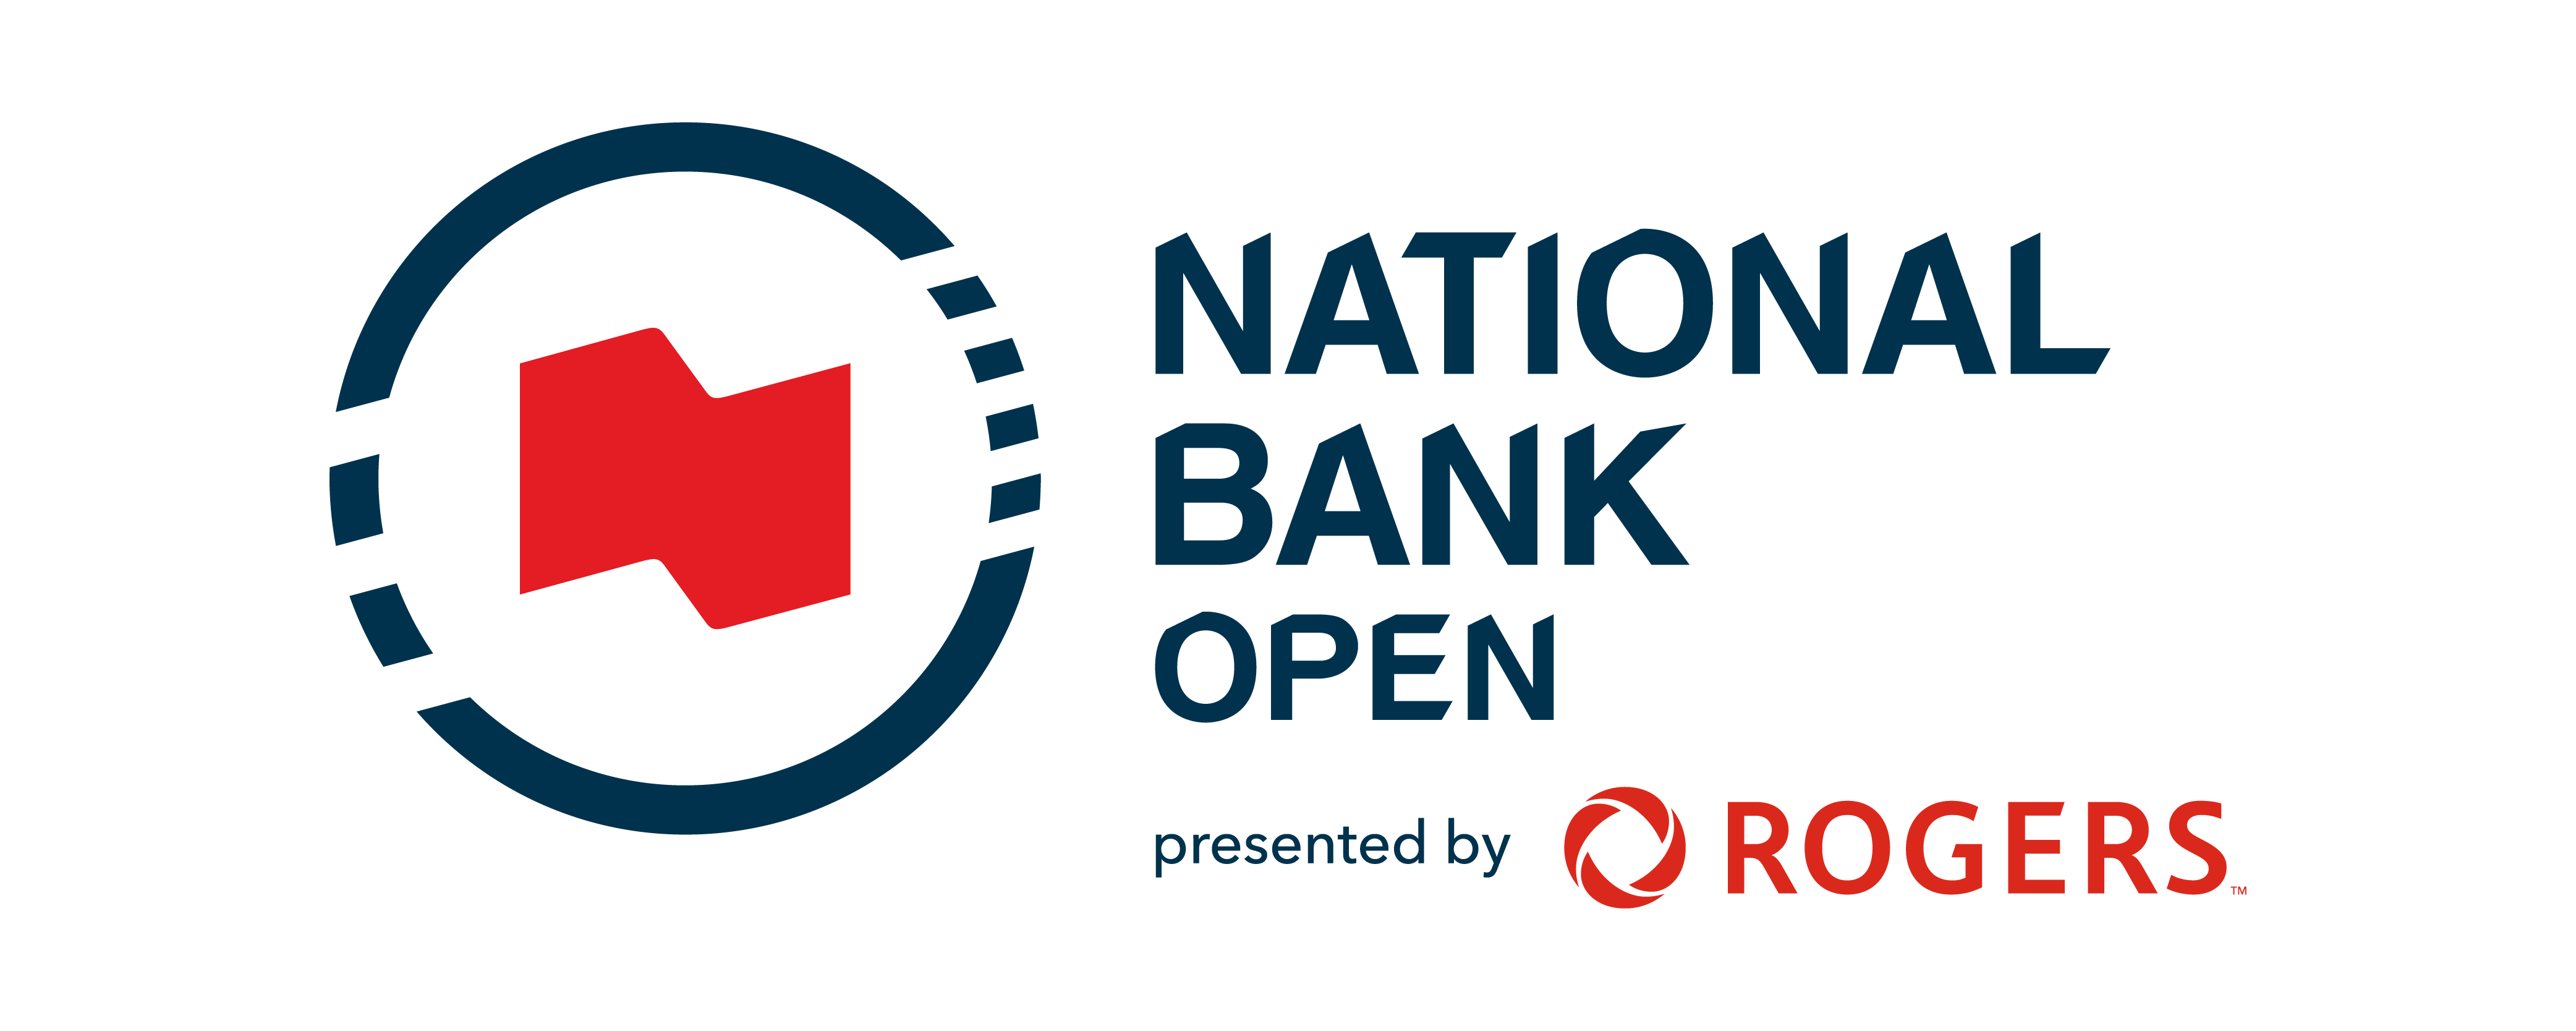 Caratula de NATIONAL BANK OPEN (Masters de Canadá) 